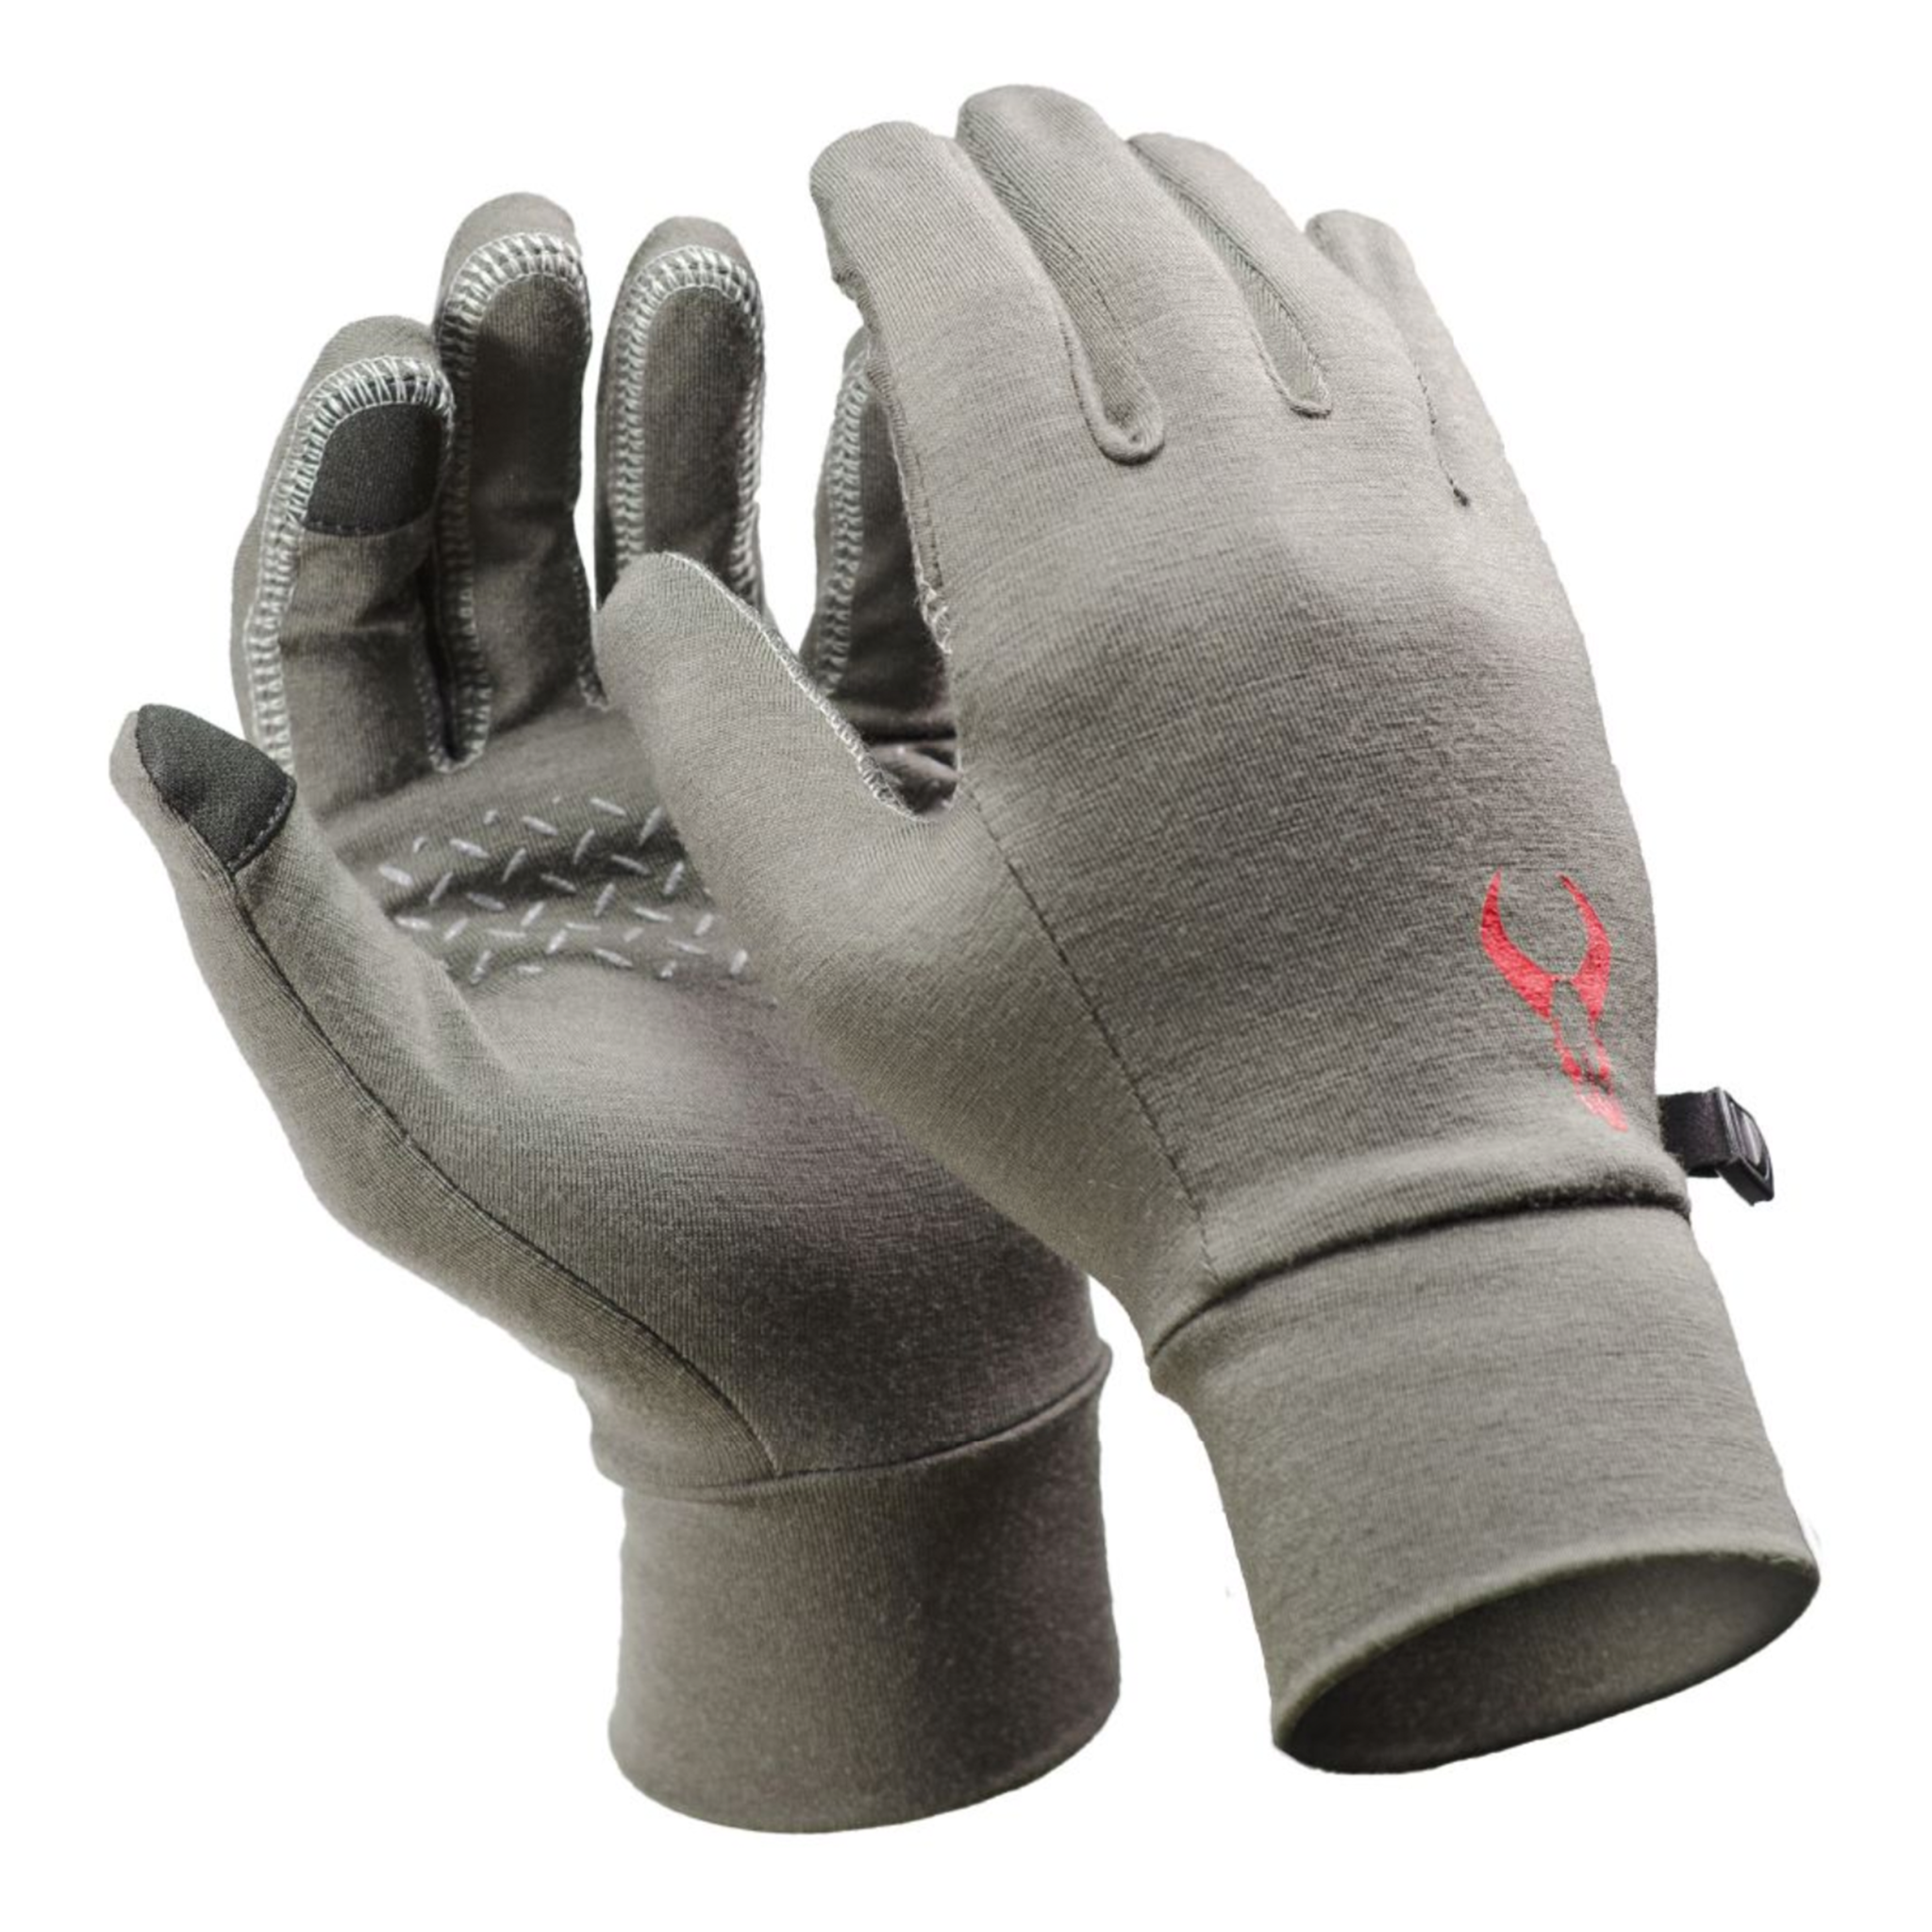 Badlands Badlands Merino Glove Liner FX